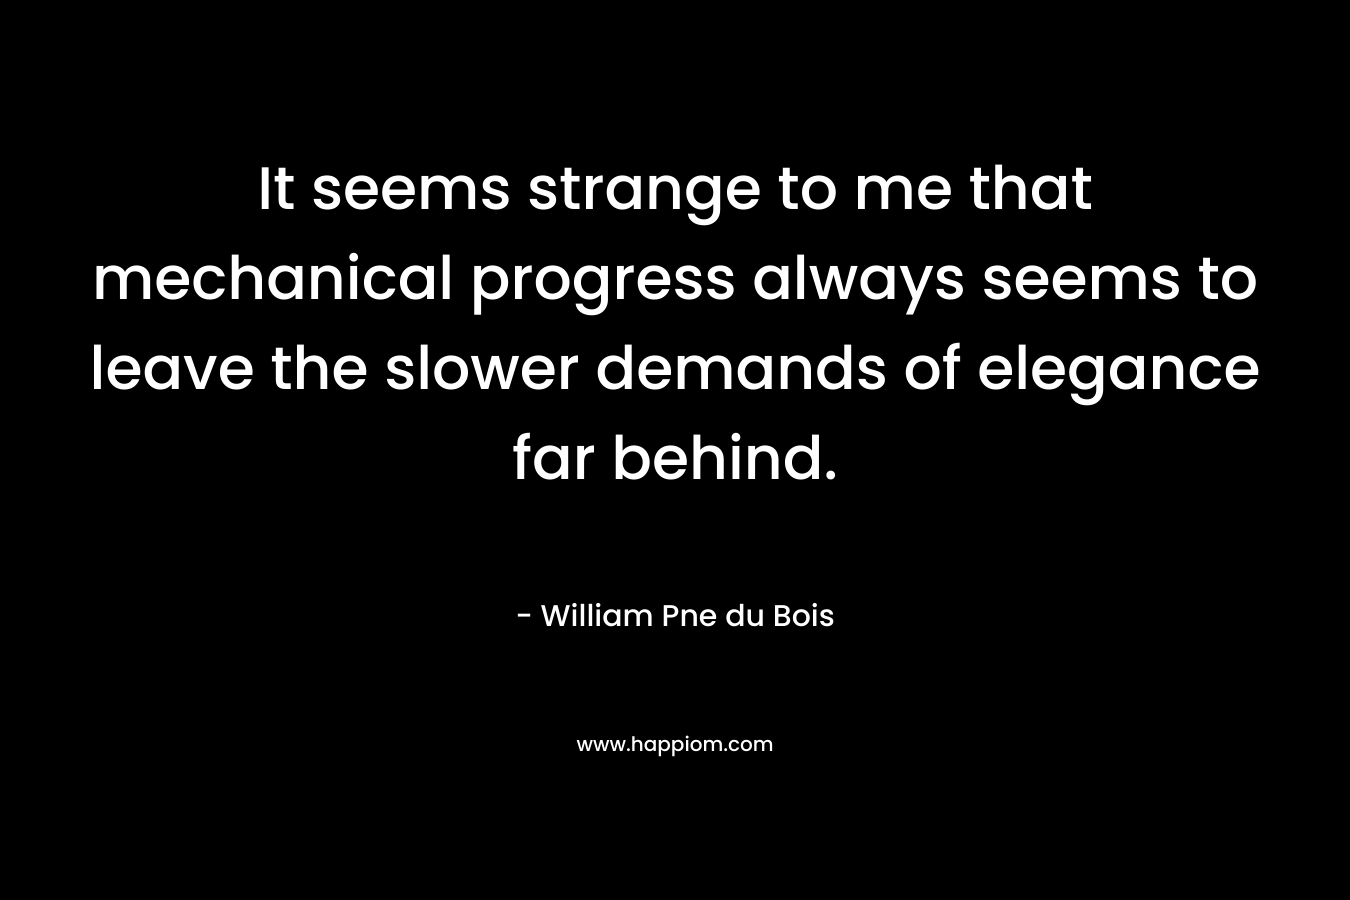 It seems strange to me that mechanical progress always seems to leave the slower demands of elegance far behind. – William Pne du Bois